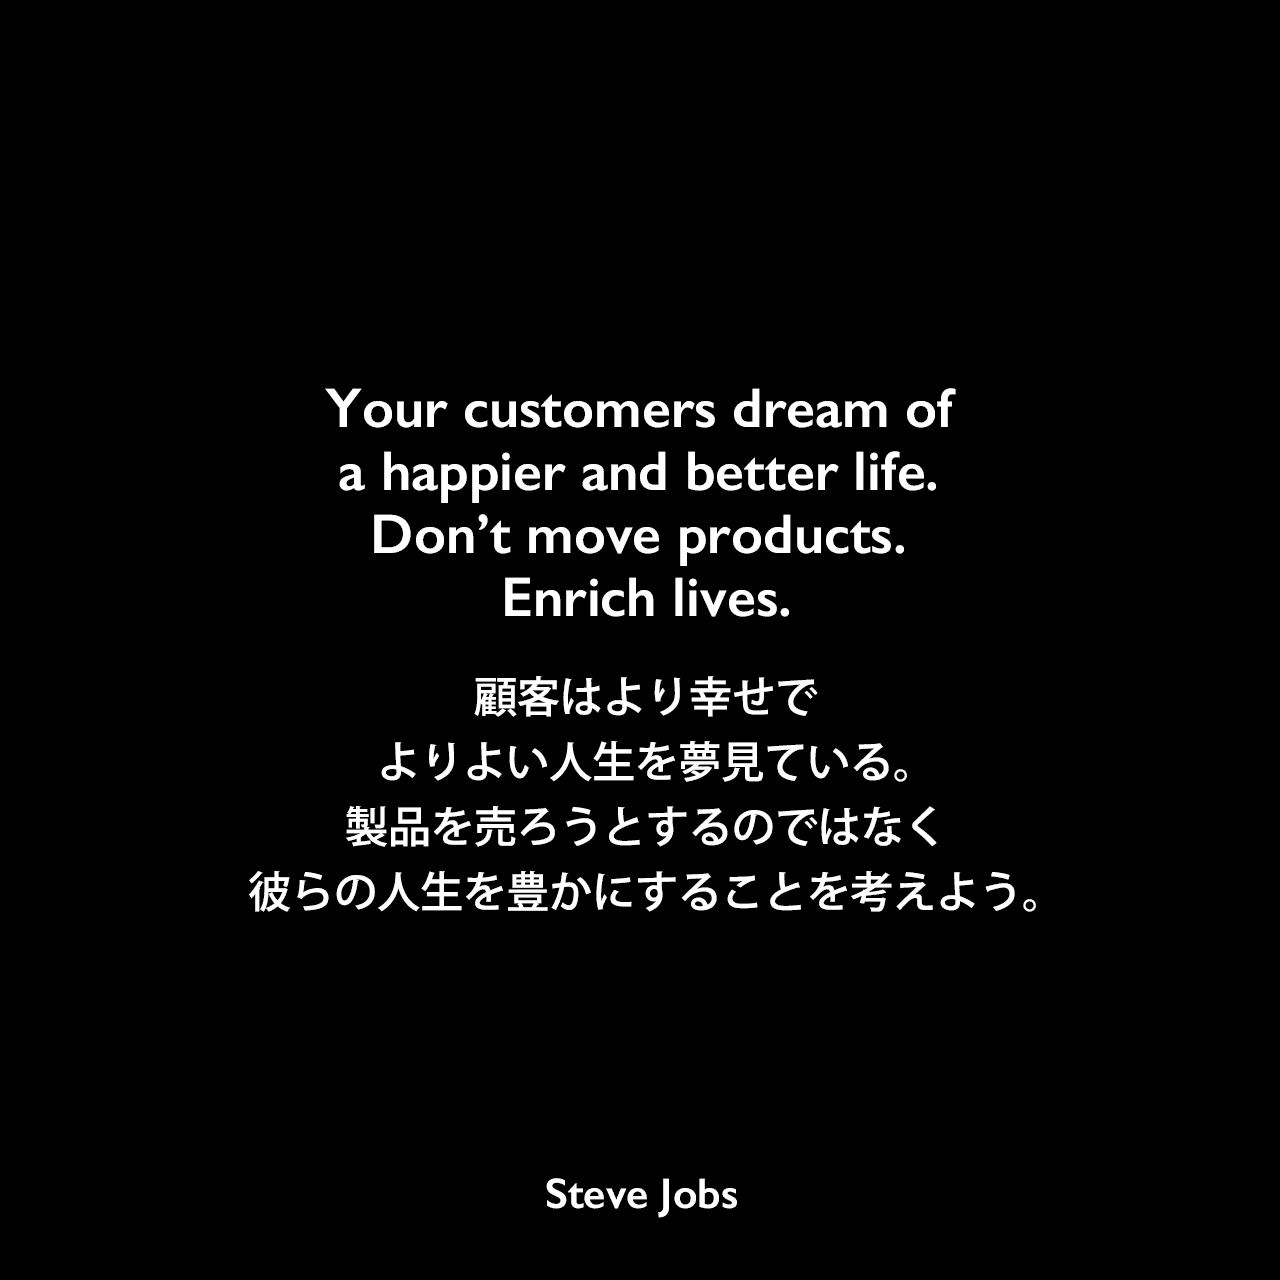 Your customers dream of a happier and better life. Don’t move products. Enrich lives.顧客はより幸せでよりよい人生を夢見ている。製品を売ろうとするのではなく、彼らの人生を豊かにすることを考えよう。Steve Jobs